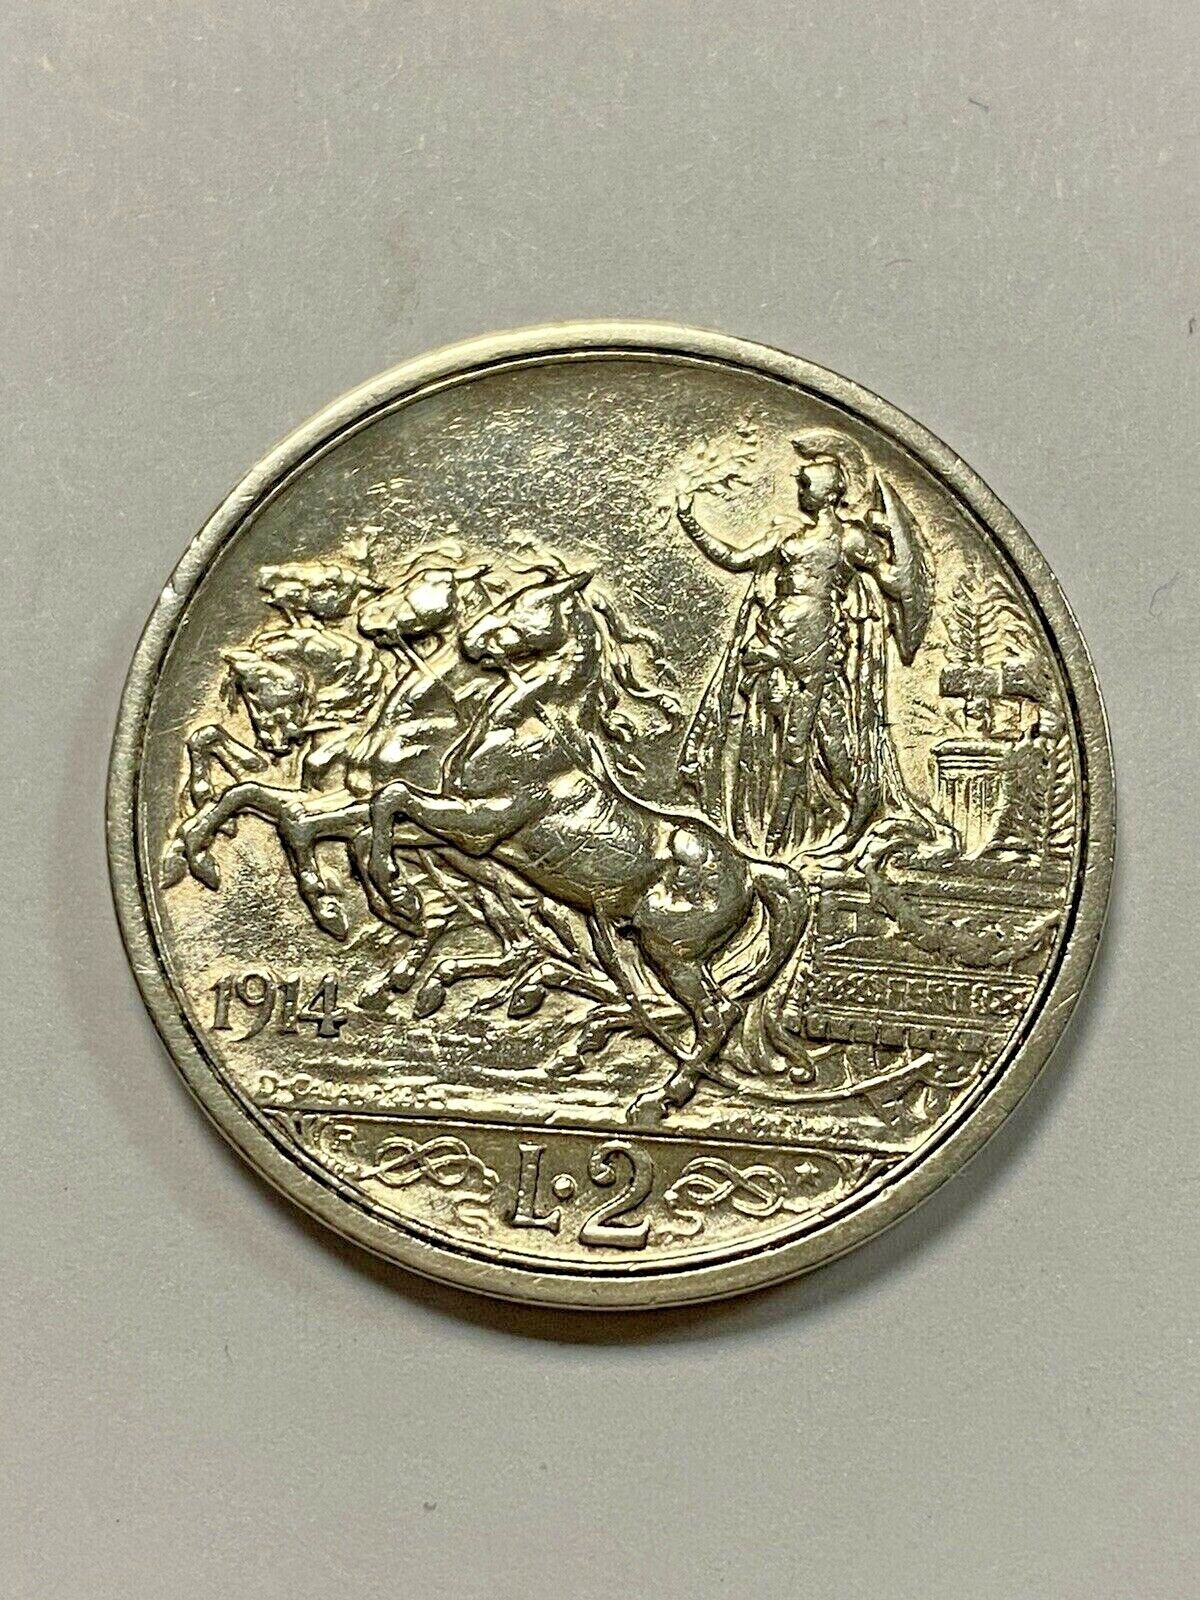 Italy - 1914 - 2 LIRE Silver Coin